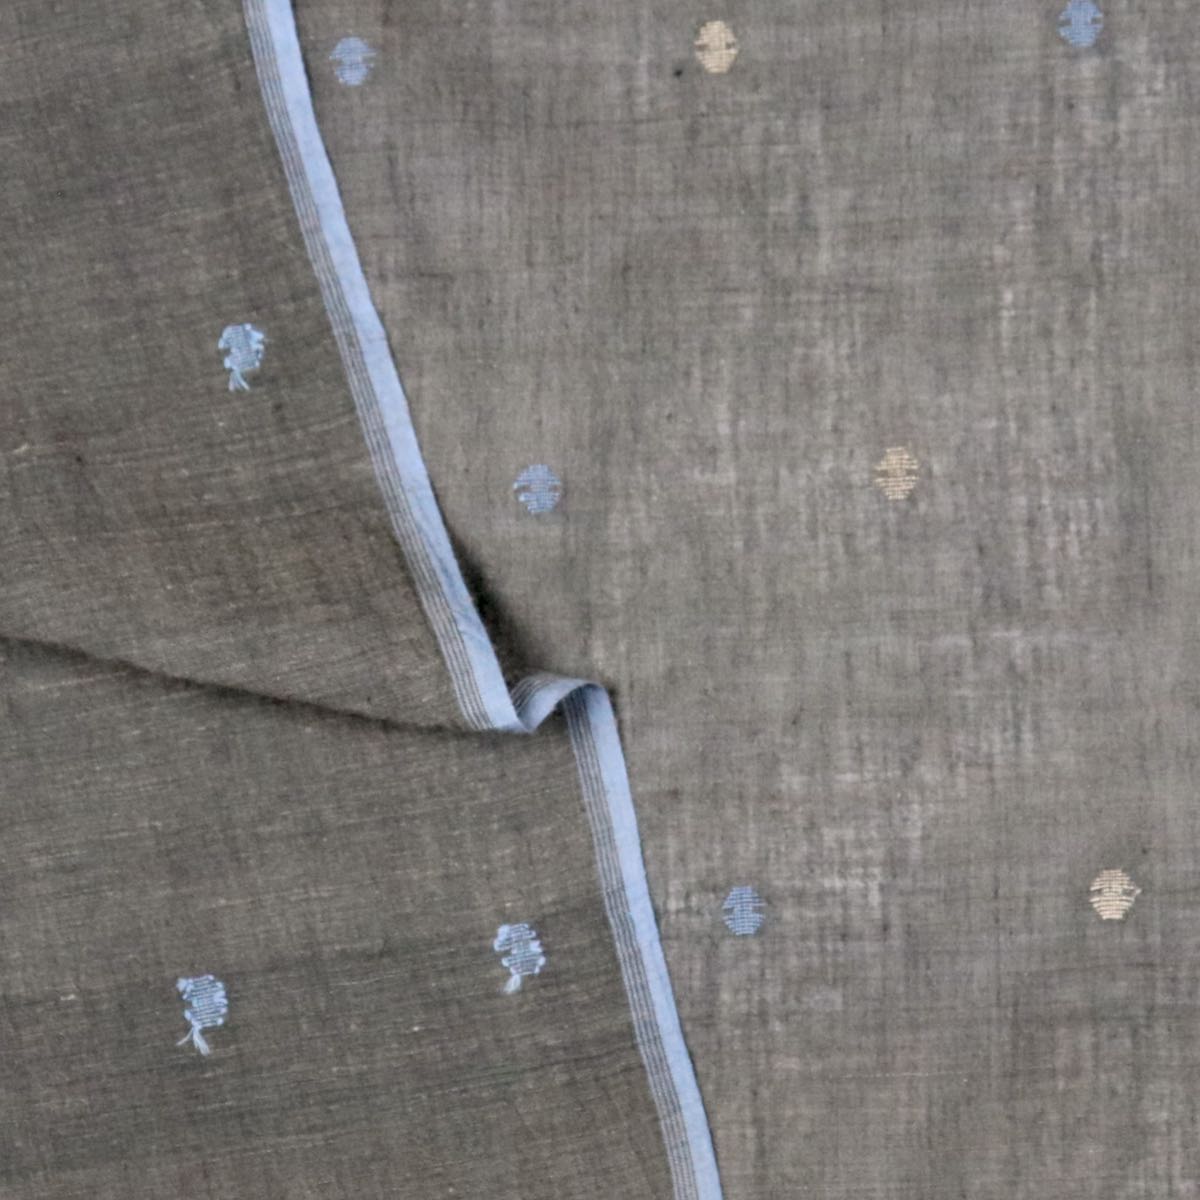 blue and brown jamdani handloom cotton fabric